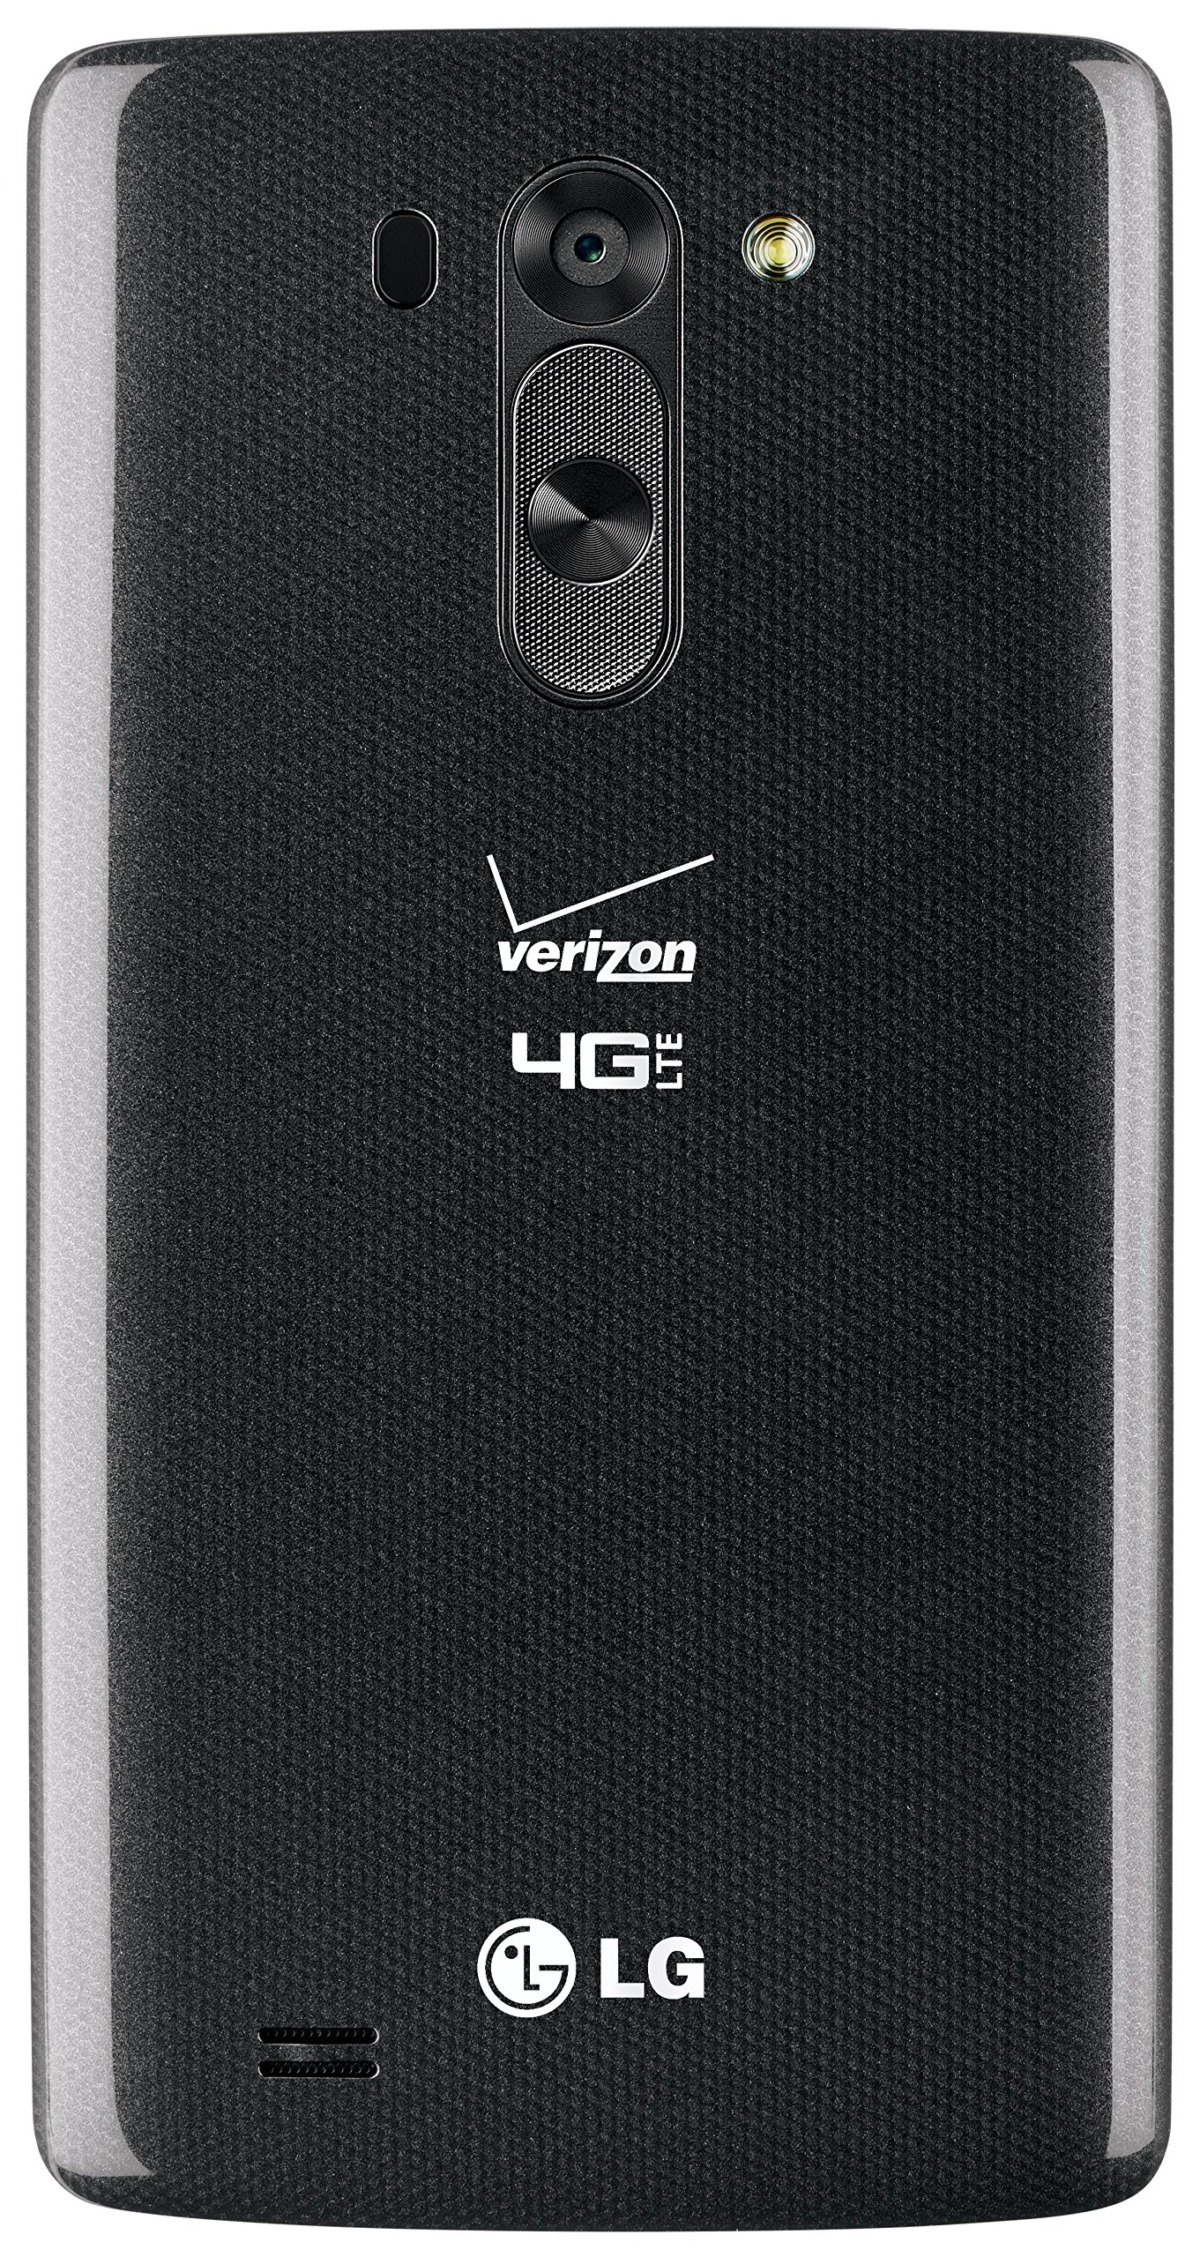 LG G Vista (Verizon Prepaid) | The Storepaperoomates Retail Market - Fast Affordable Shopping